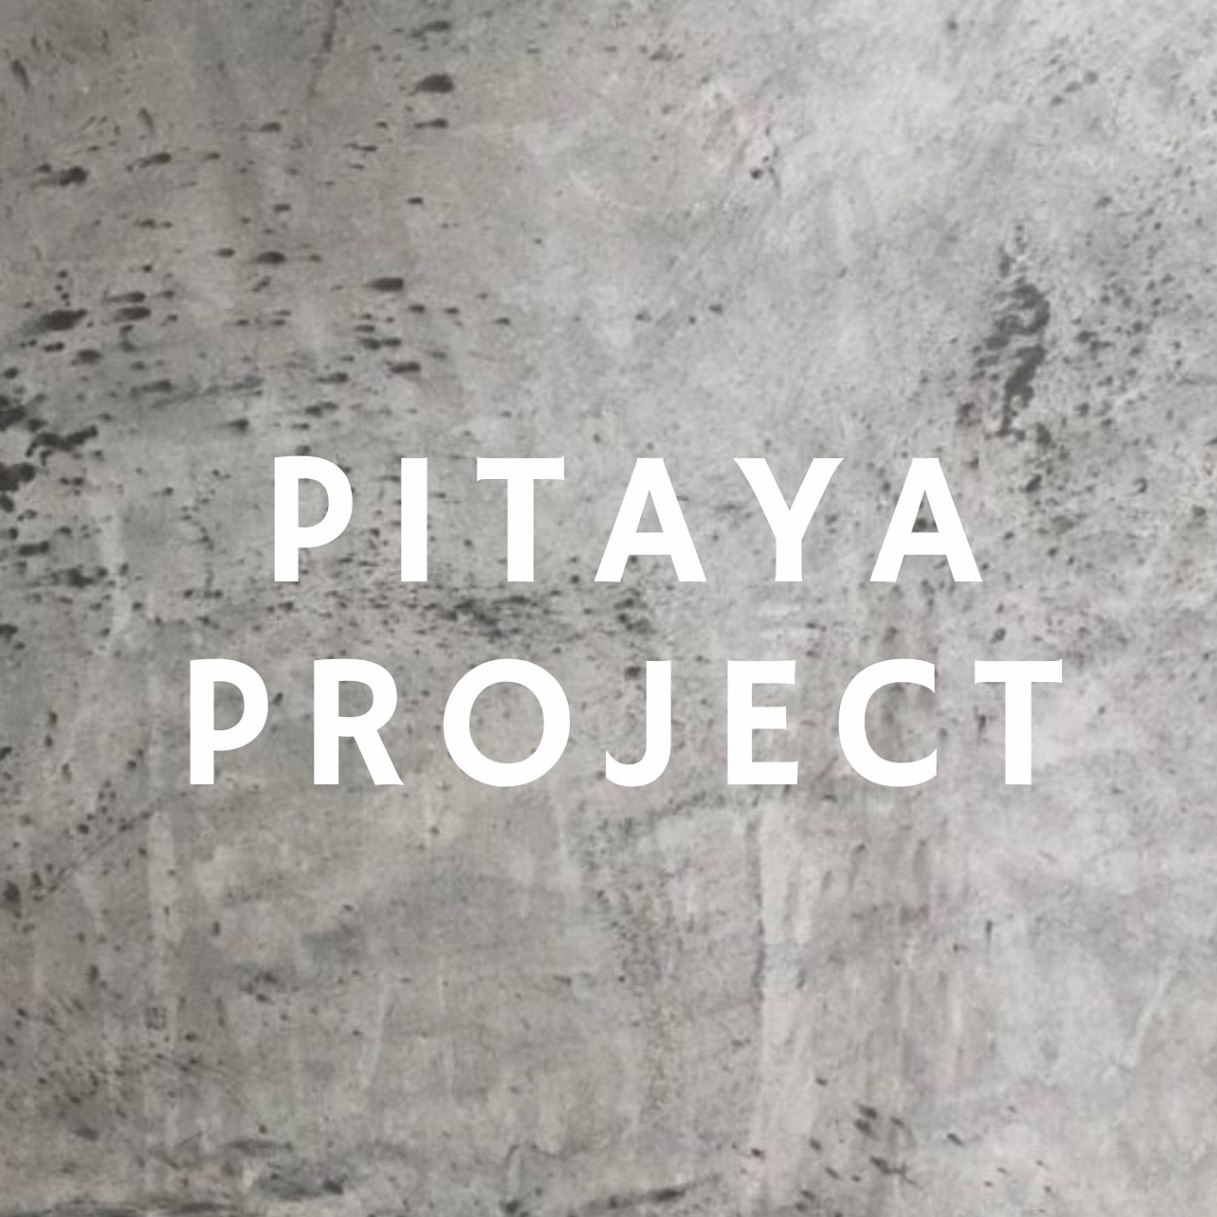 Pitaya project Johor Bahru